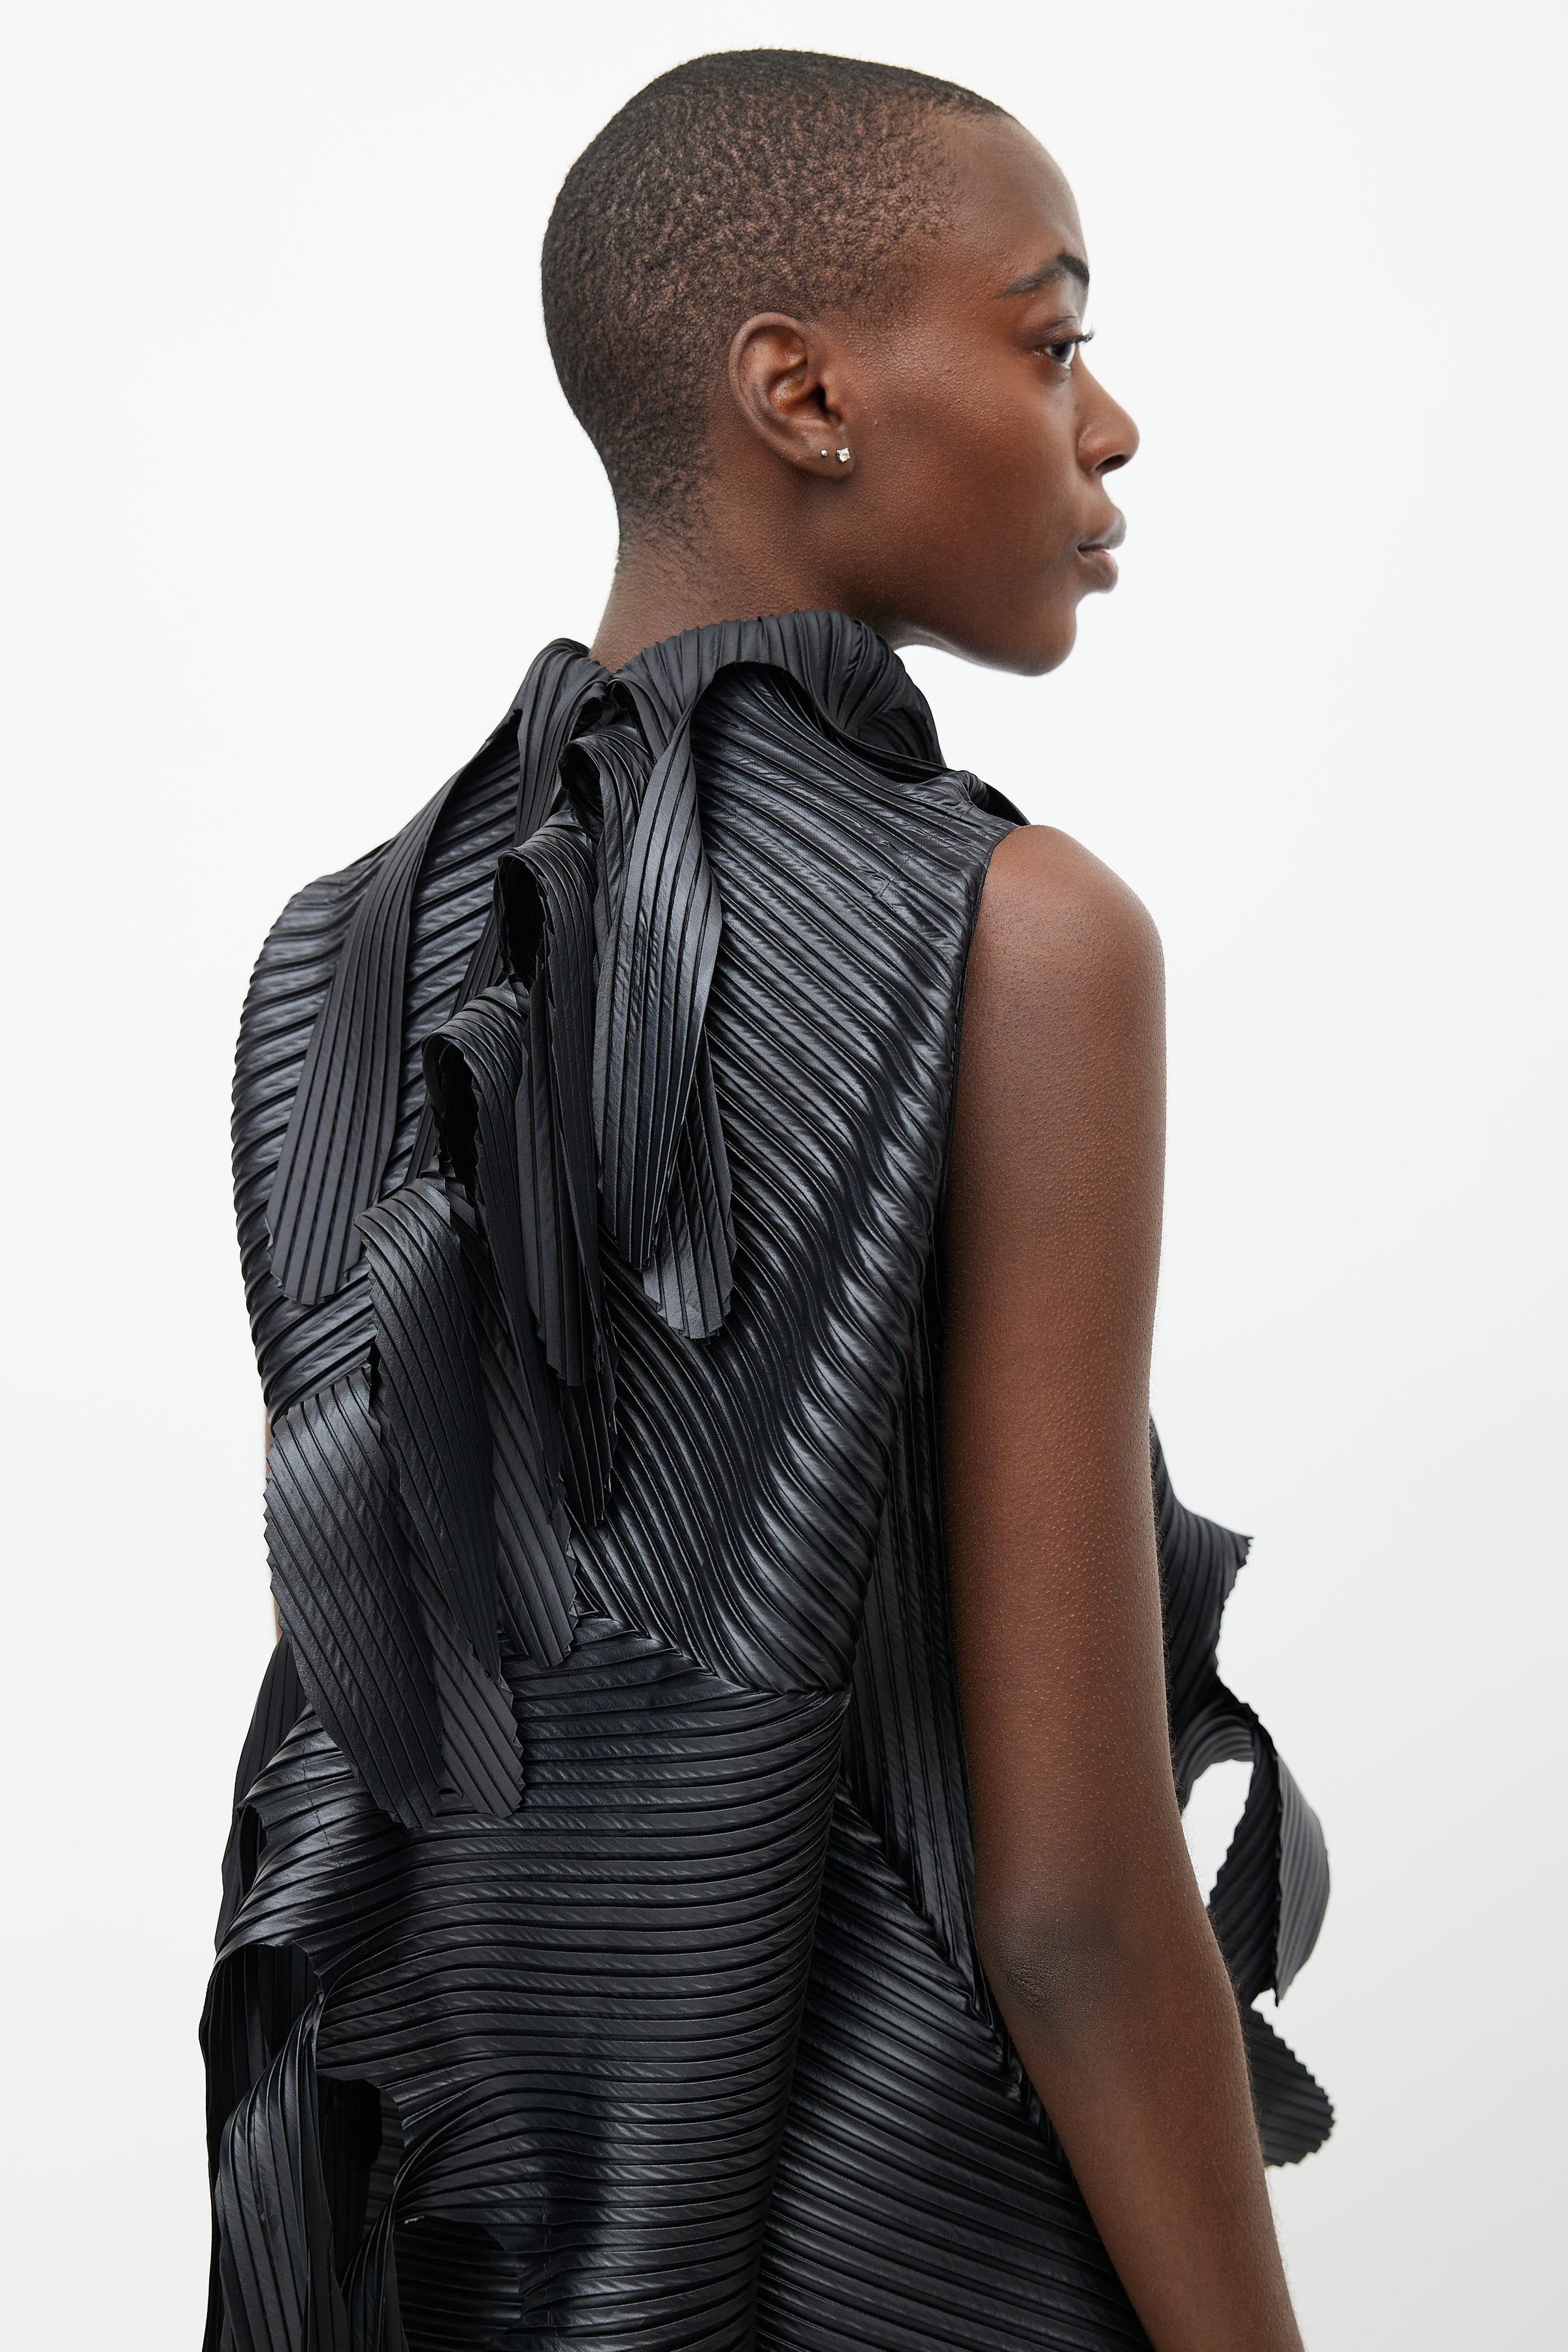 fantom Erobrer Bred vifte Issey Miyake // Black Sculptural Pleated Dress – VSP Consignment